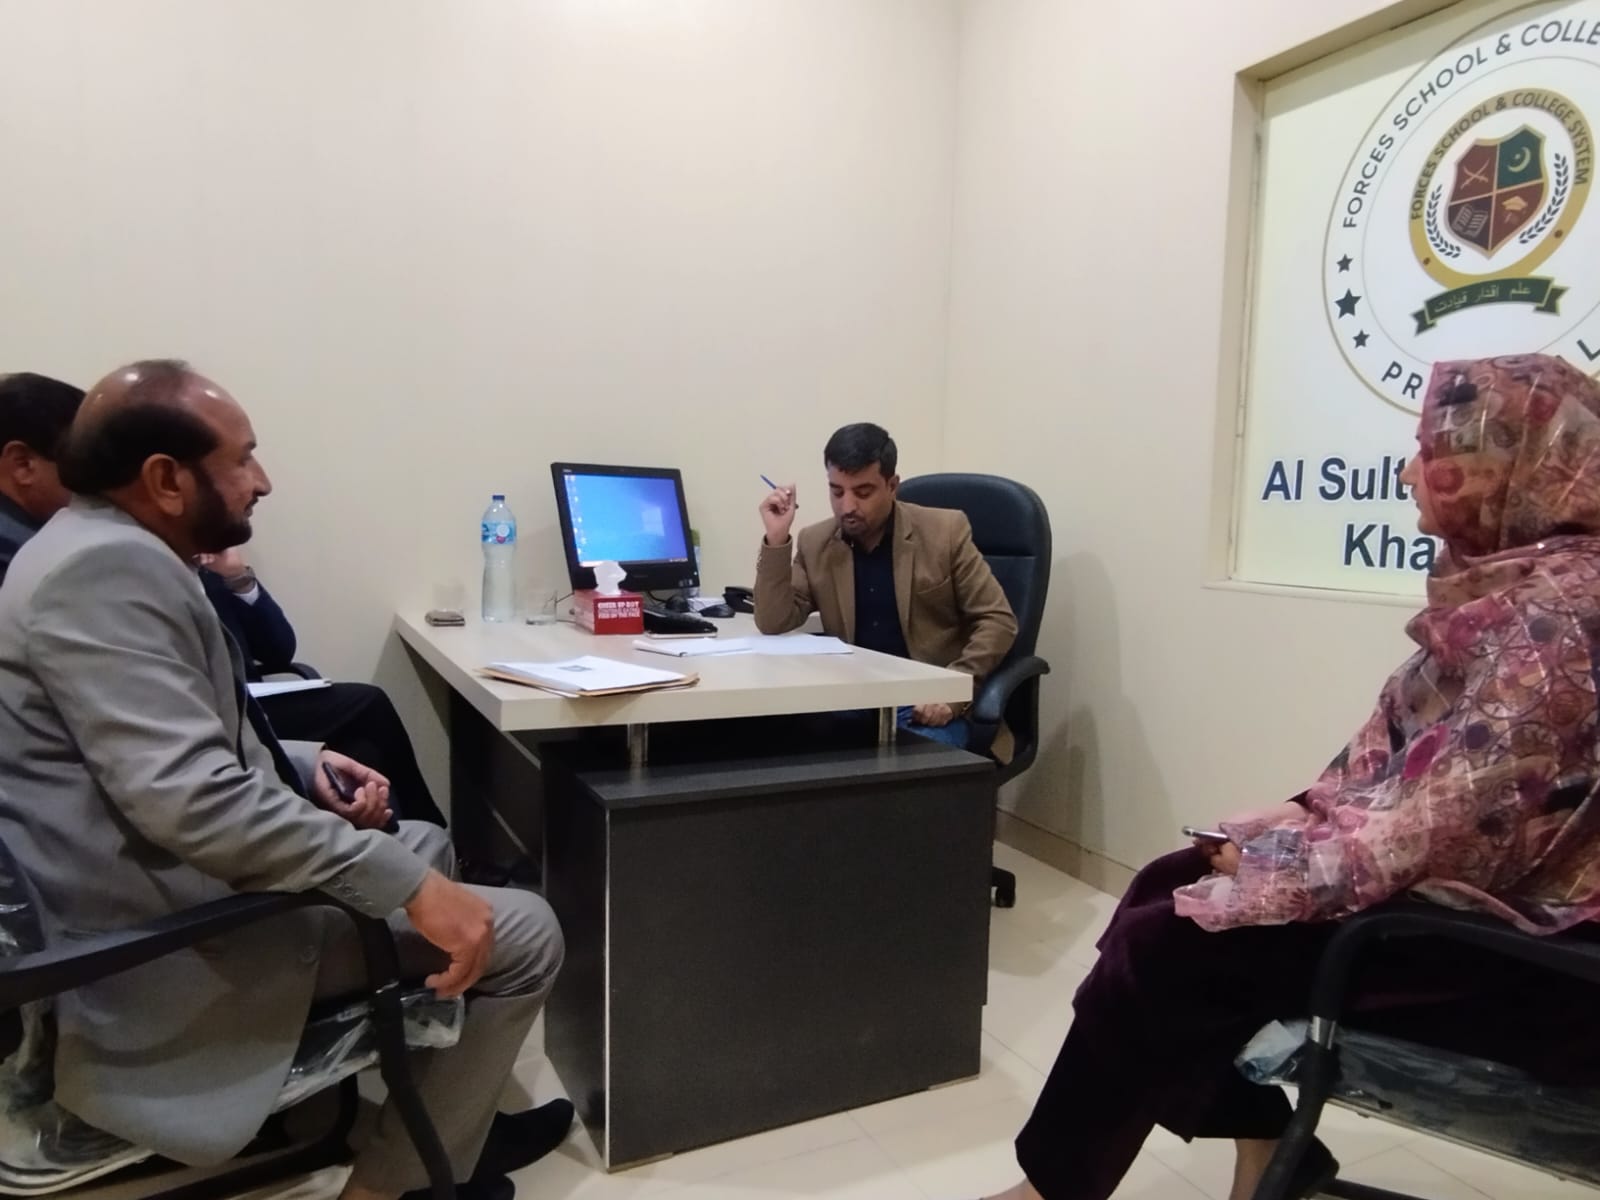 Al Sultan Campus Staff Hiring interviews Conducted by Headoffice